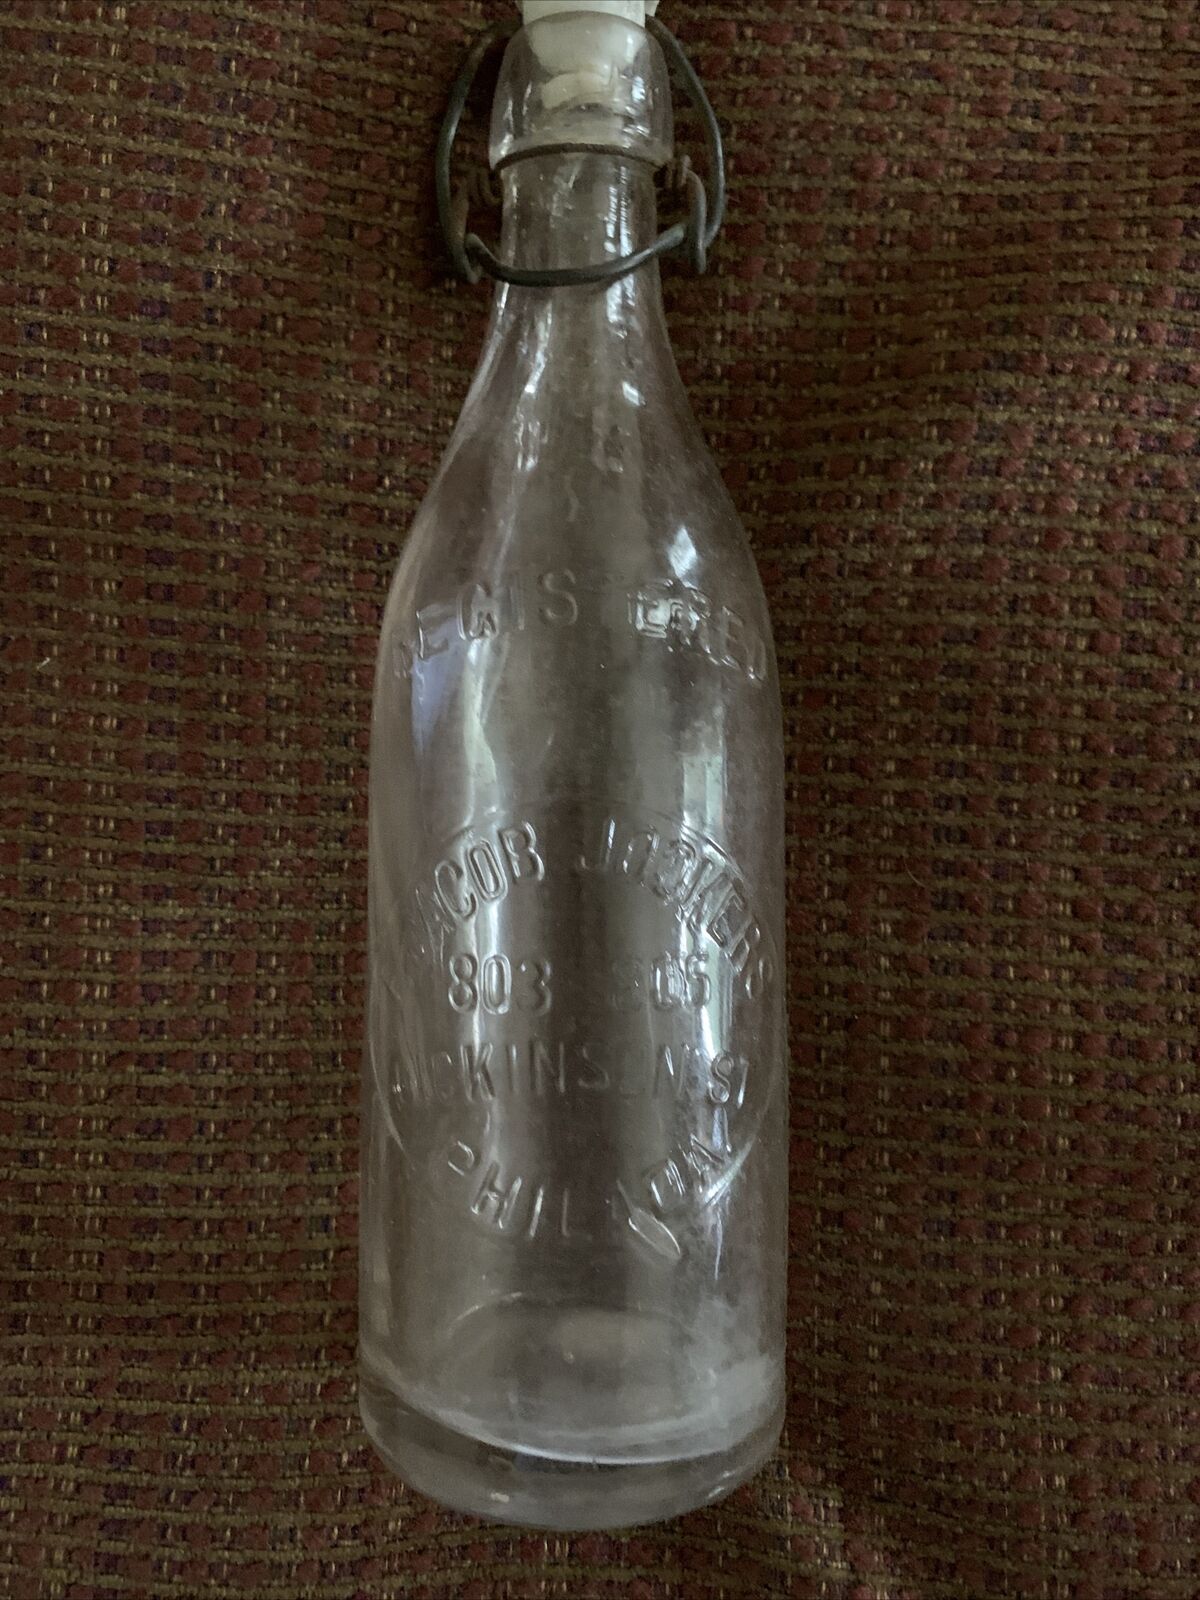  Vintage Jacob Schmidt Beer Bottle with Porcelain Cap